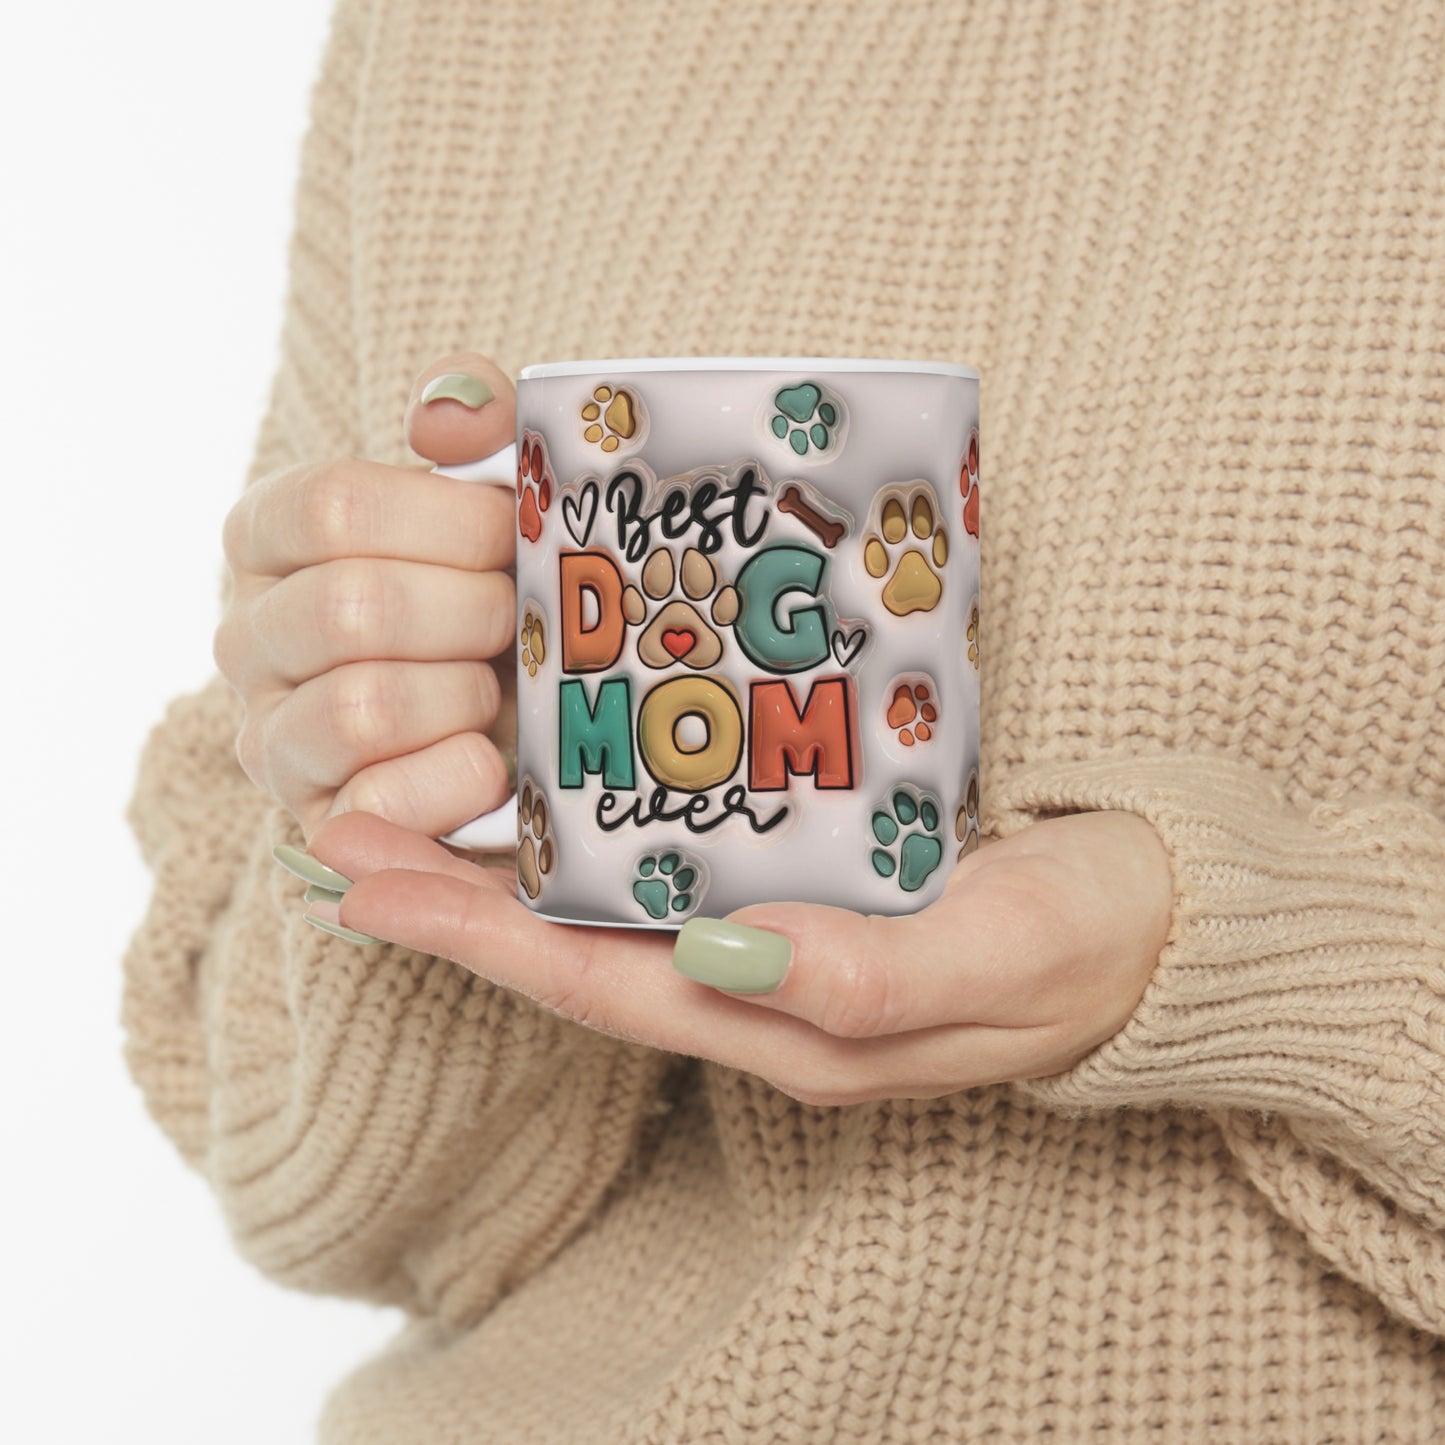 Best Dog Mom Ever Mug - Dog Mom Gift - Puffy Effect Mug